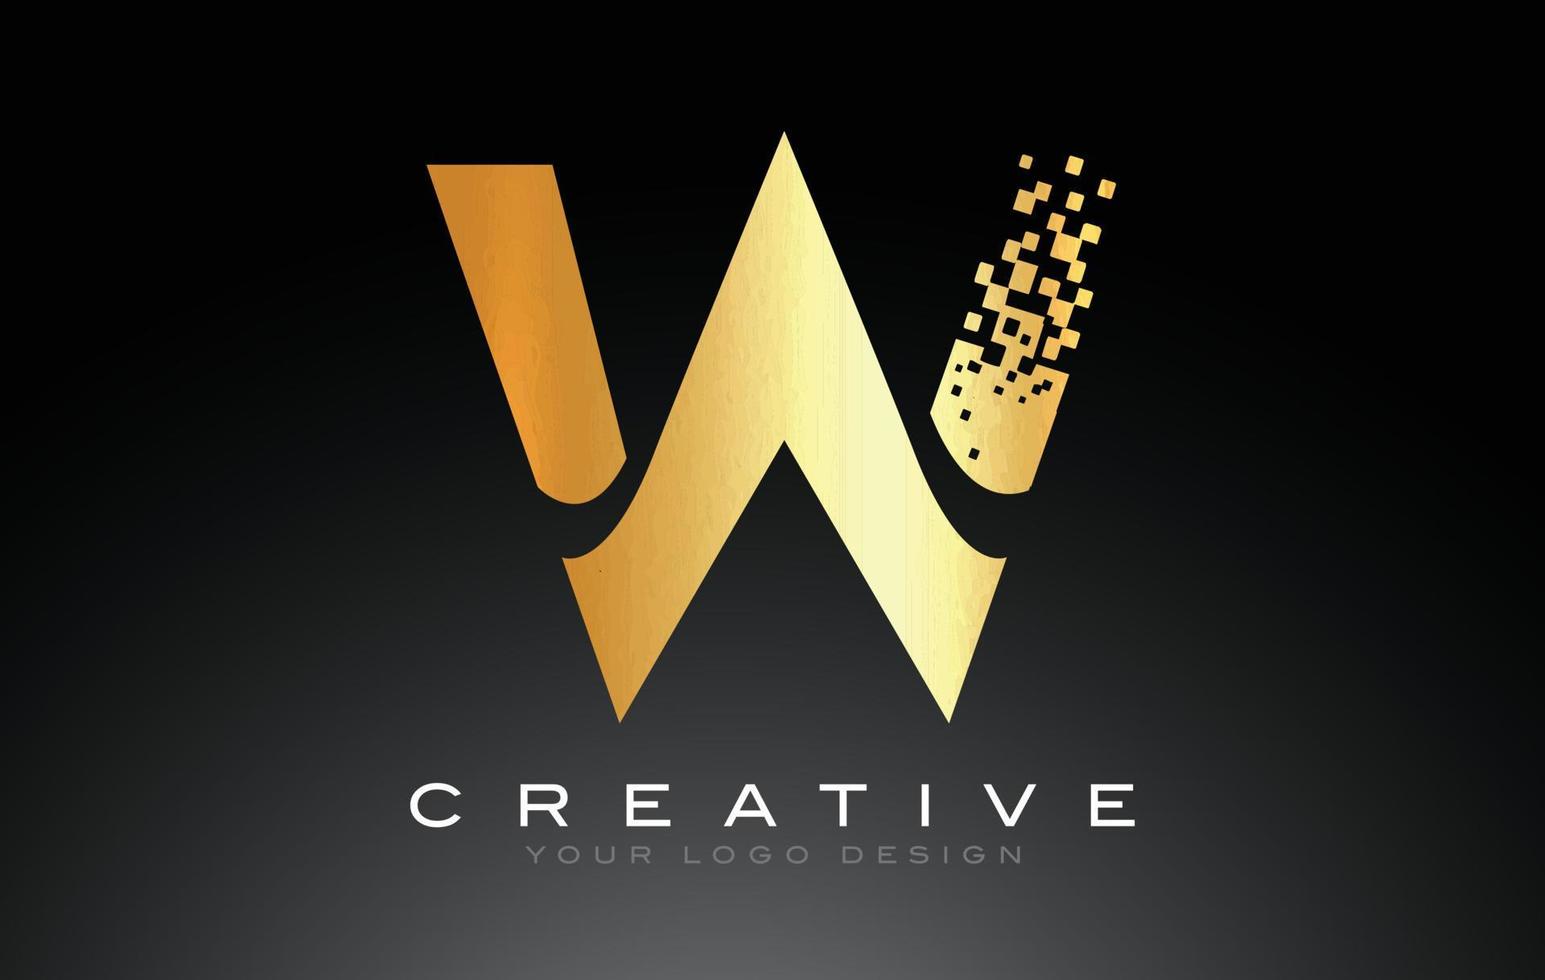 W Initial Letter Logo Design with Digital Pixels in Golden Colors. vector